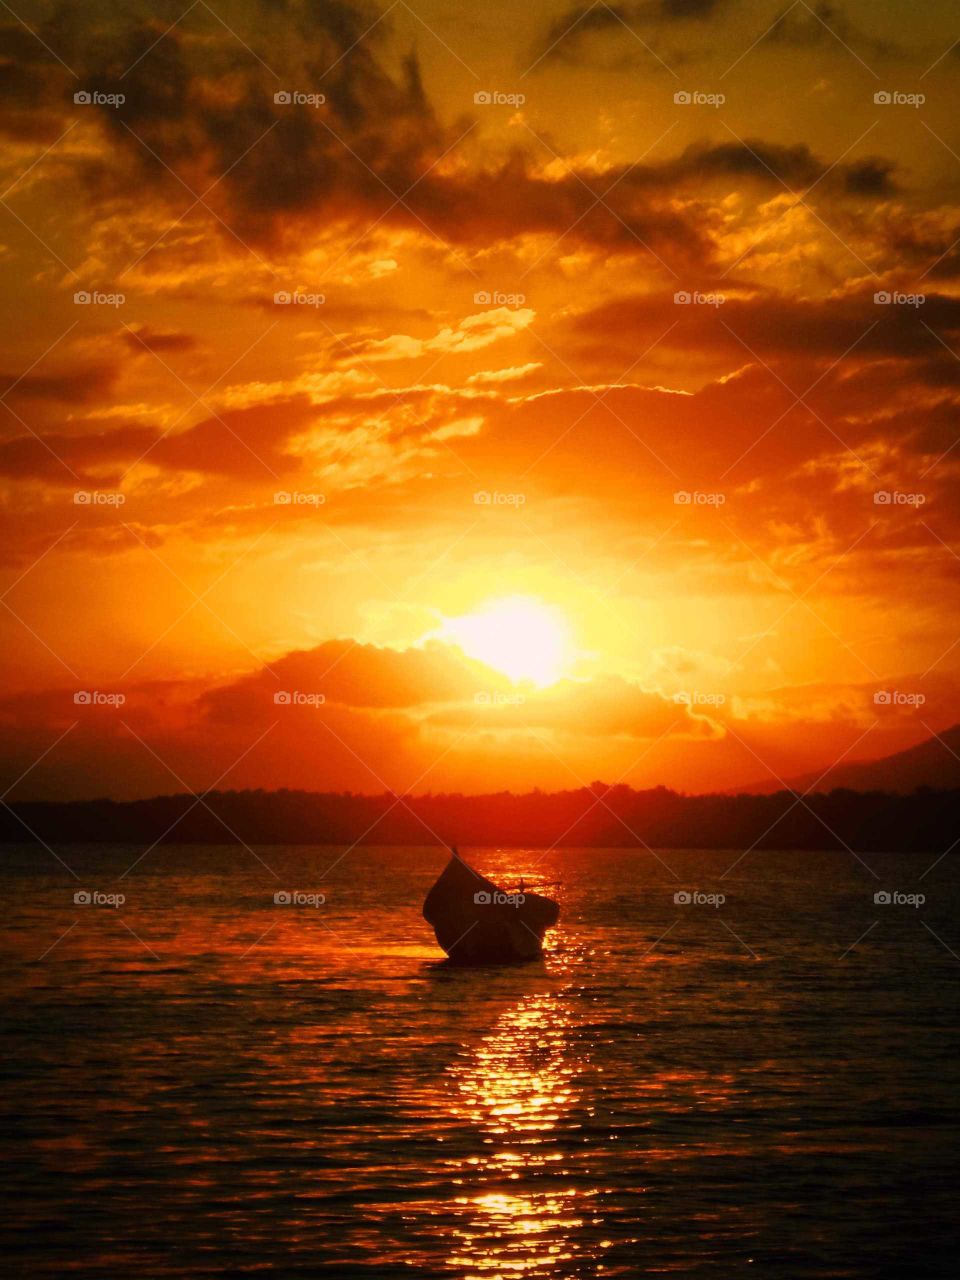 fisherman's boat at sunset, beautiful scene with orange golden hour sky, reflecting ocean, at Ilha do Cardoso, Brazil.